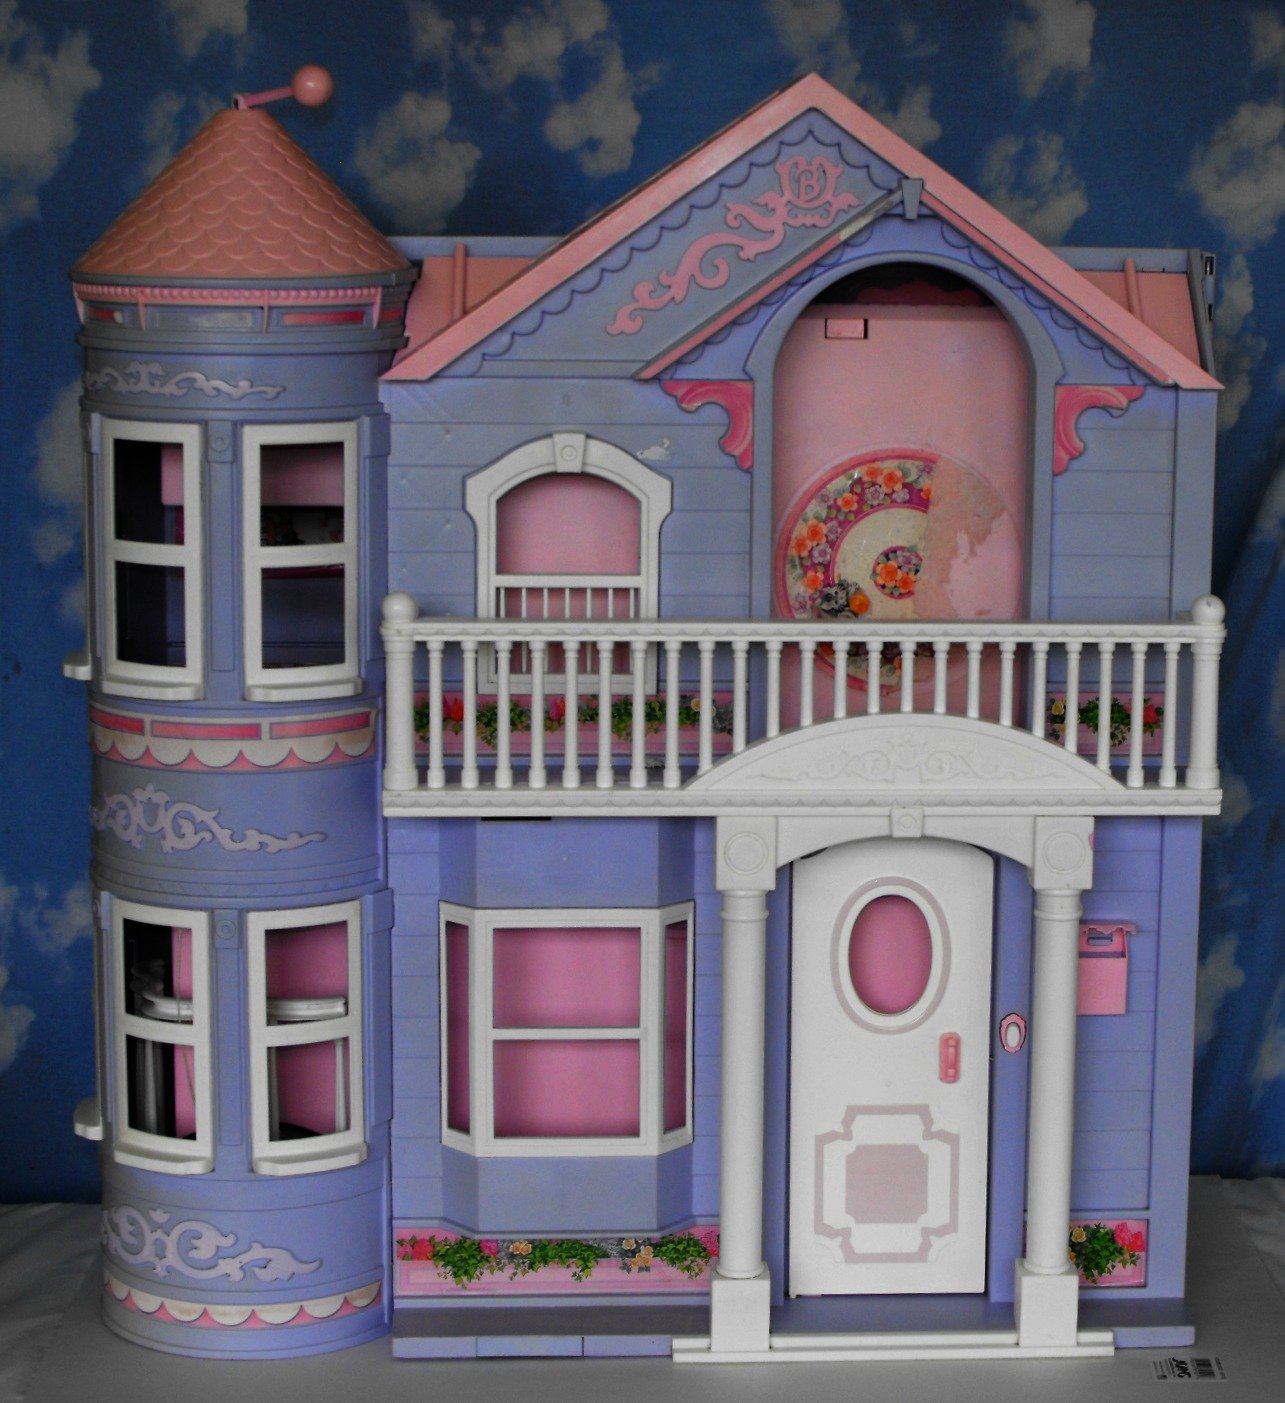 barbie doll dream house